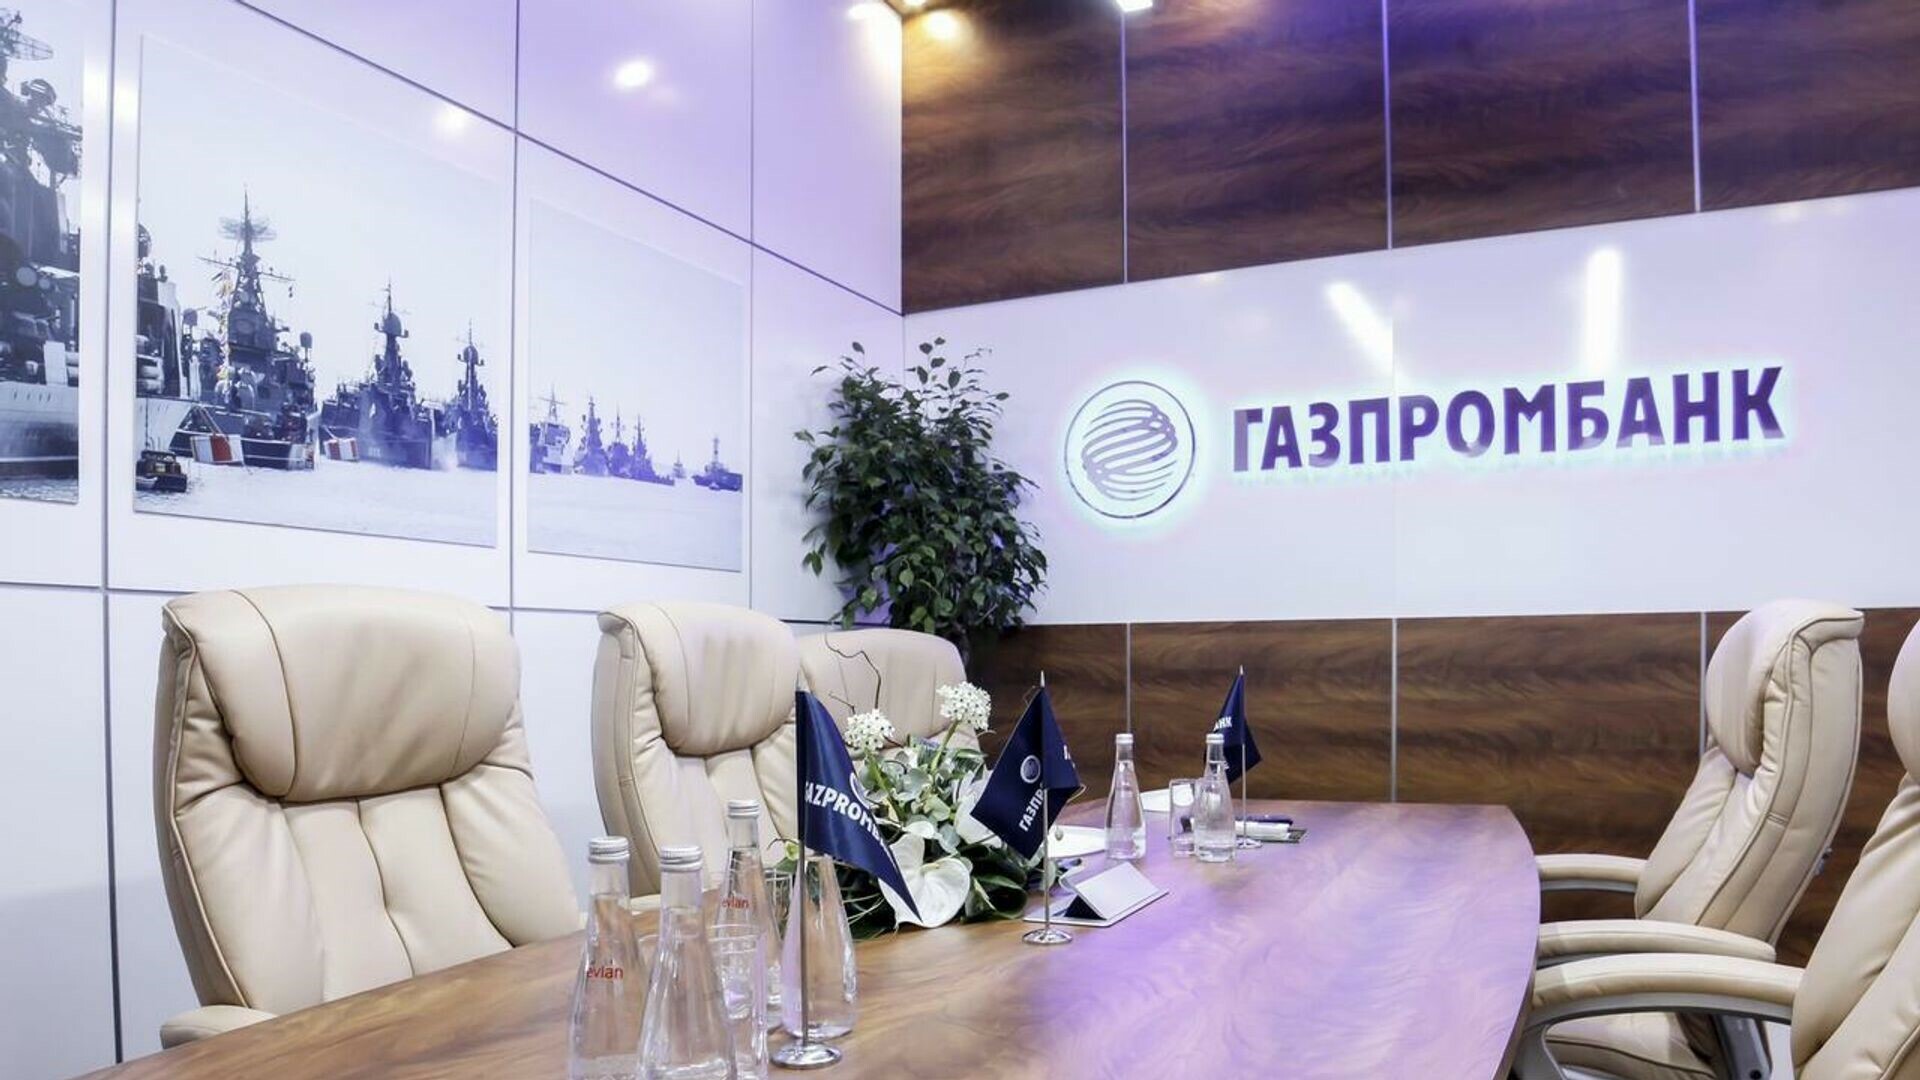 Ааа капитал газпромбанк. Газпромбанк. Газпромбанк логотип. Газпромбанк офис. Газпромбанк фото.